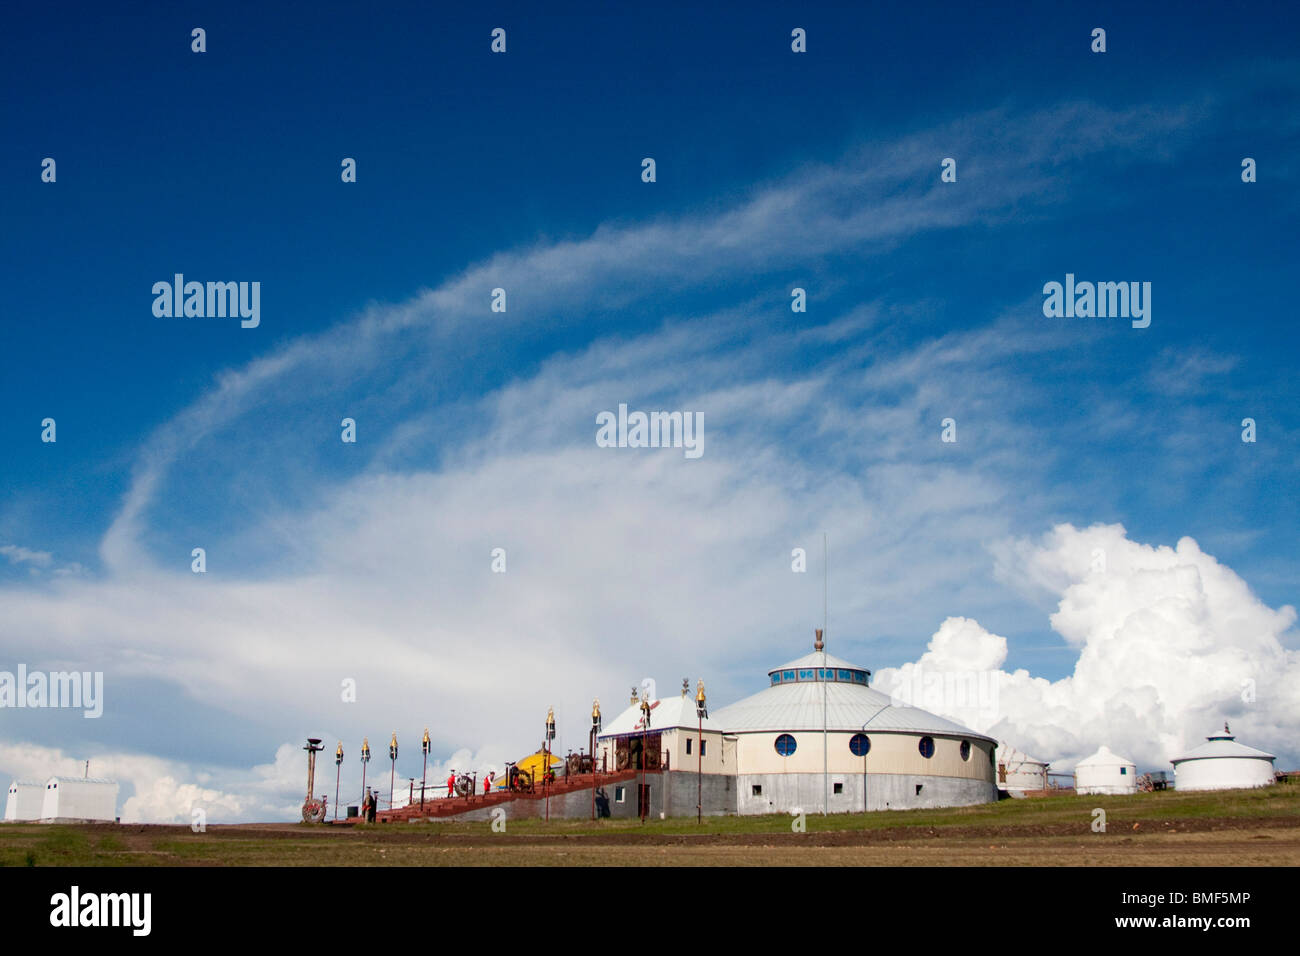 Yurt shaped hotel rooms in Hulun Buir Grassland, Hailar, Hulunbuir, Inner Mongolia Autonomous Region, China Stock Photo